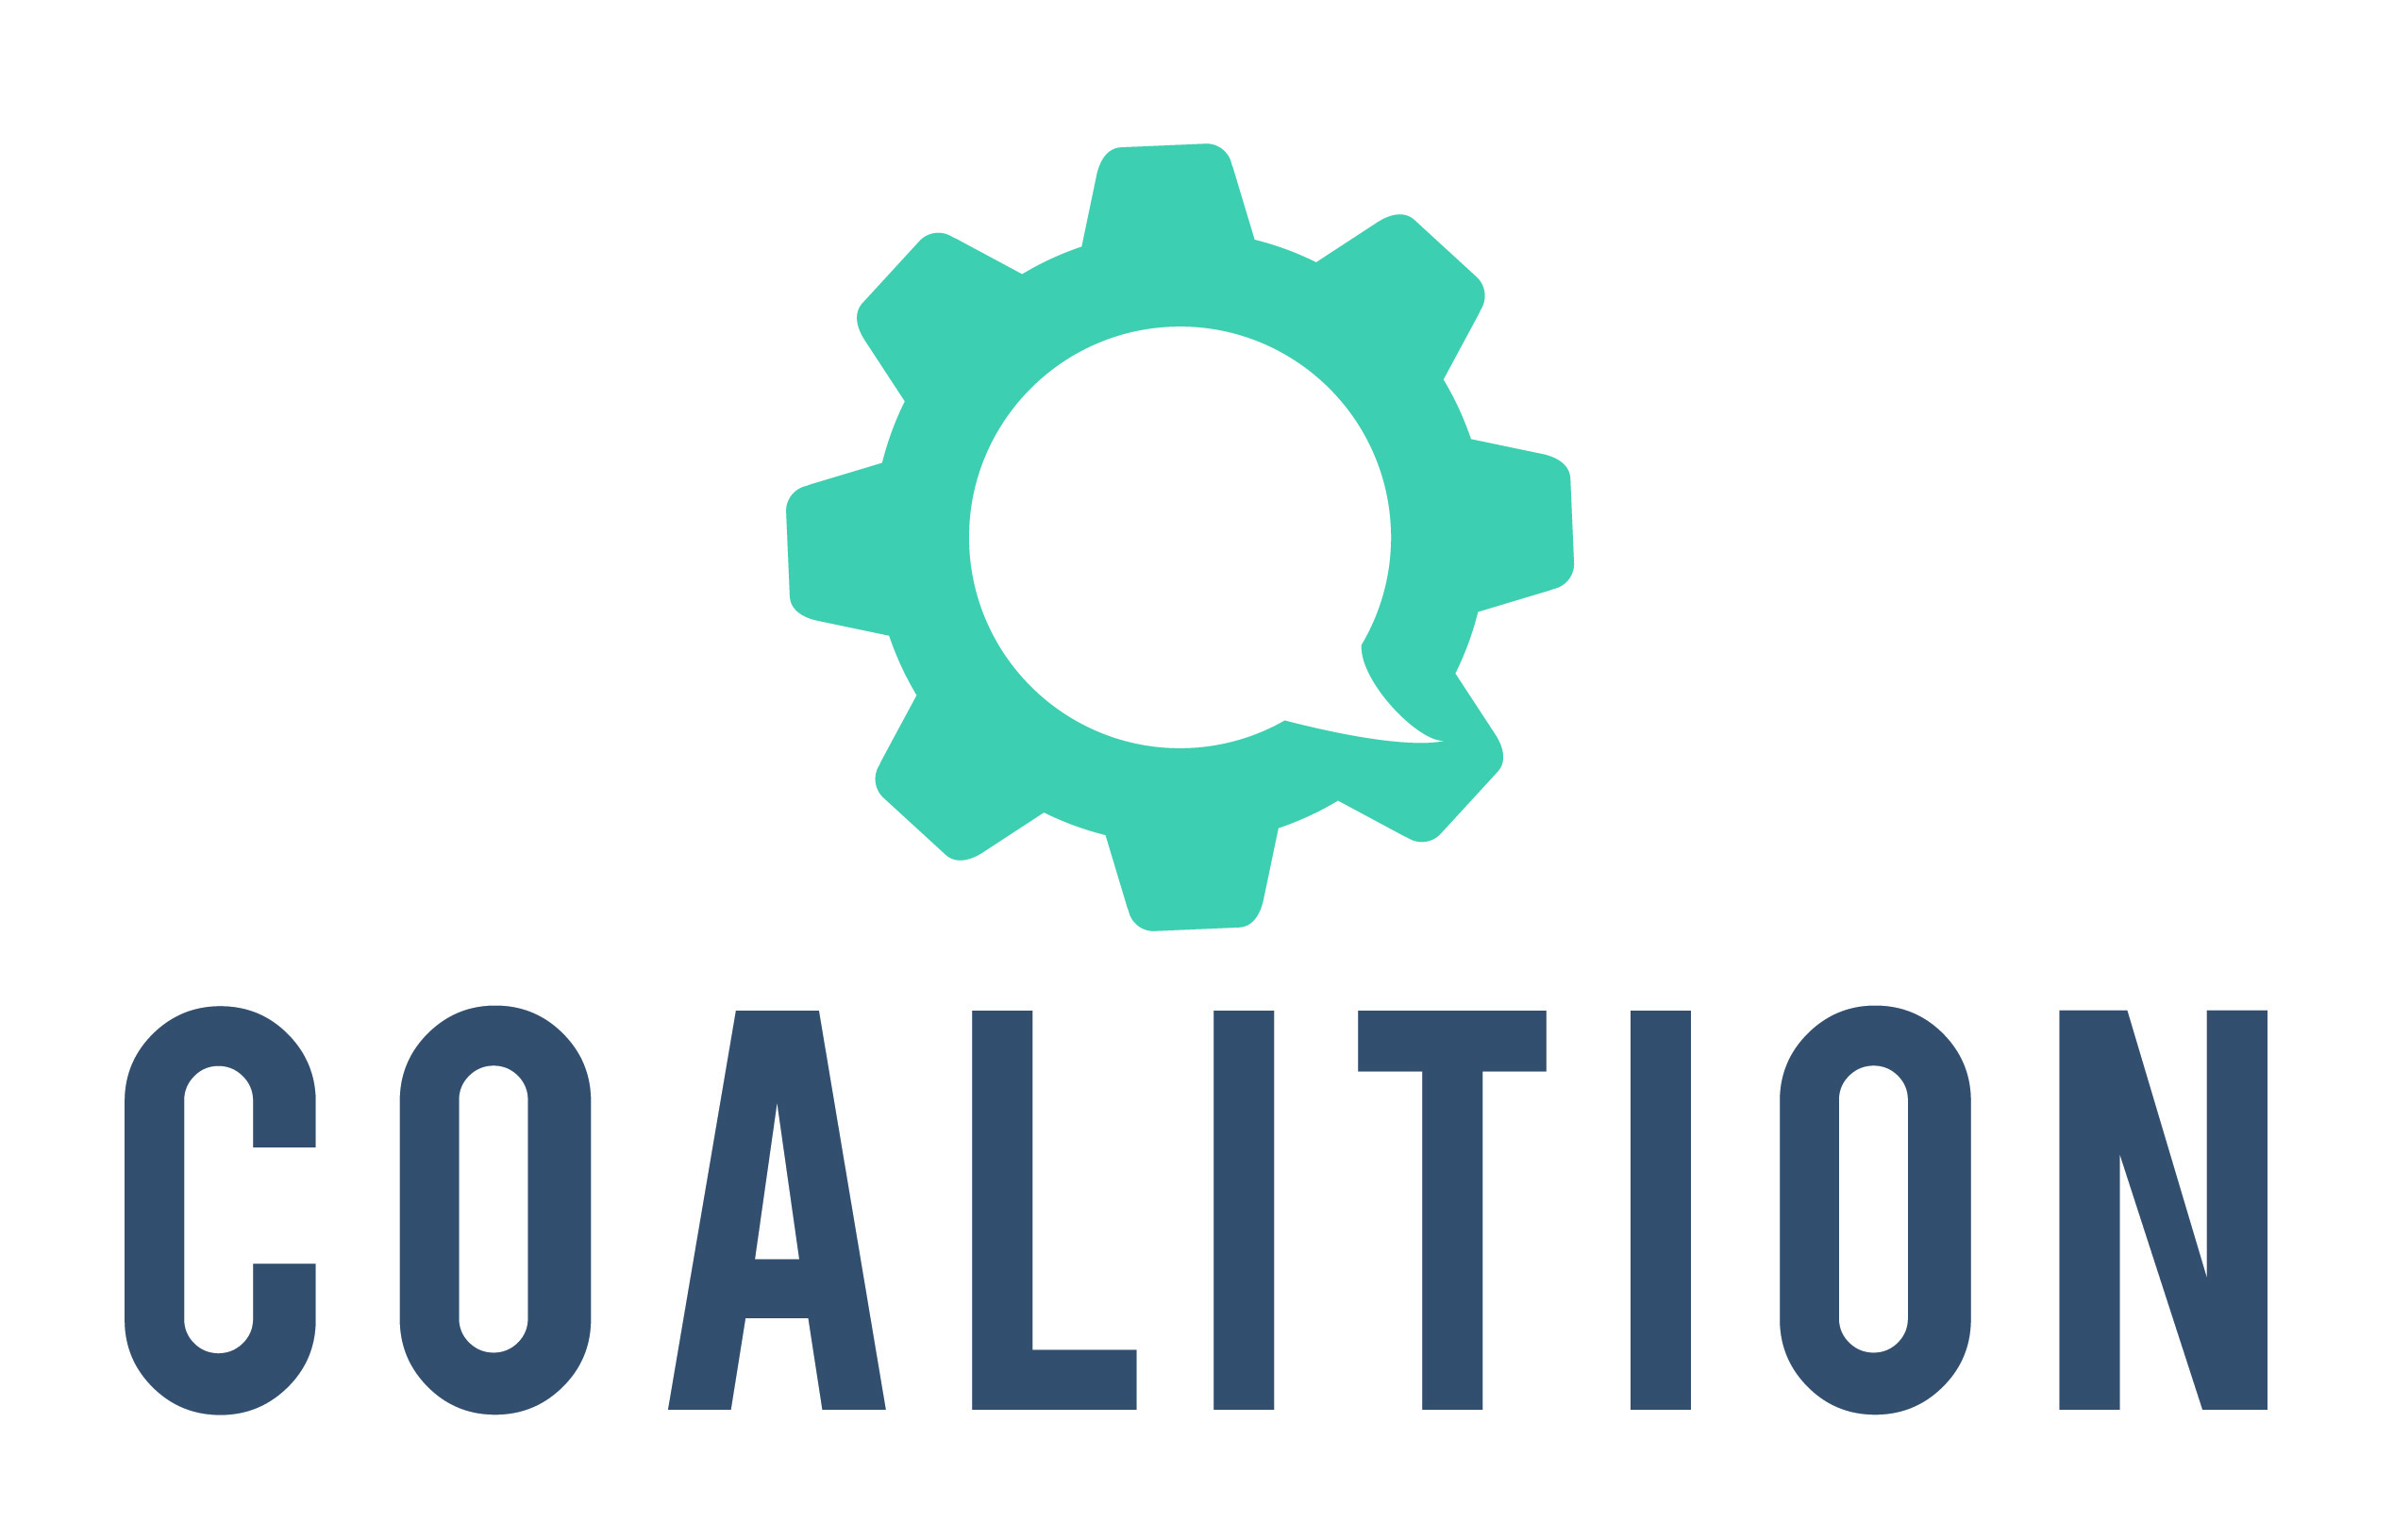 Coalition